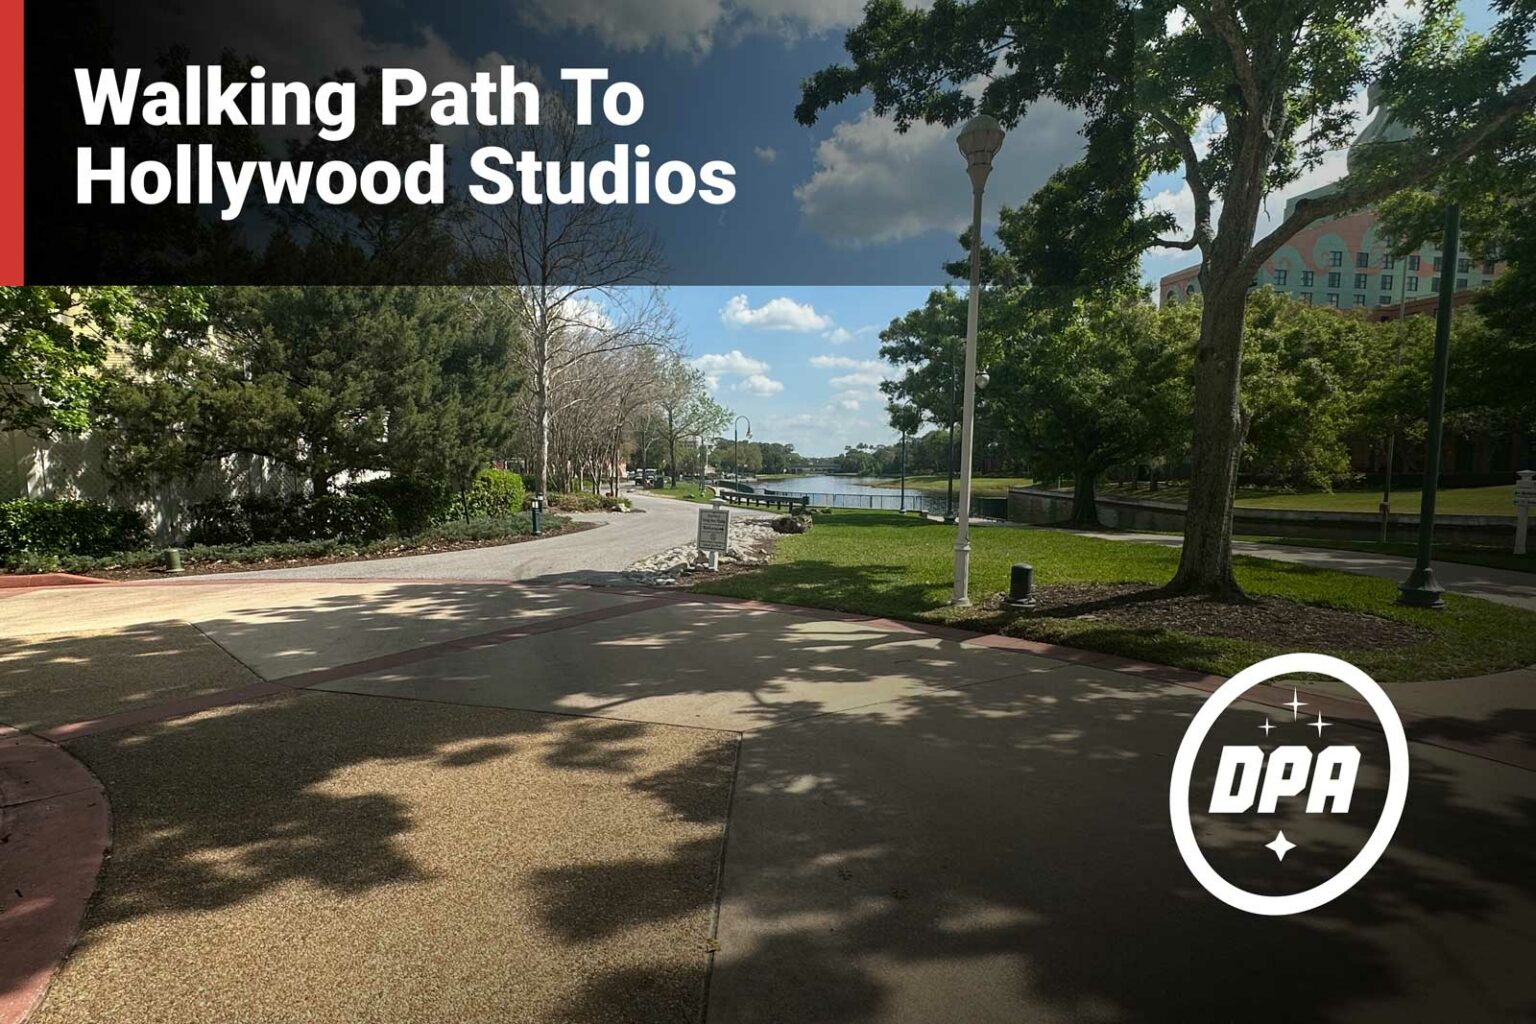 Walking path to Hollywood Studios